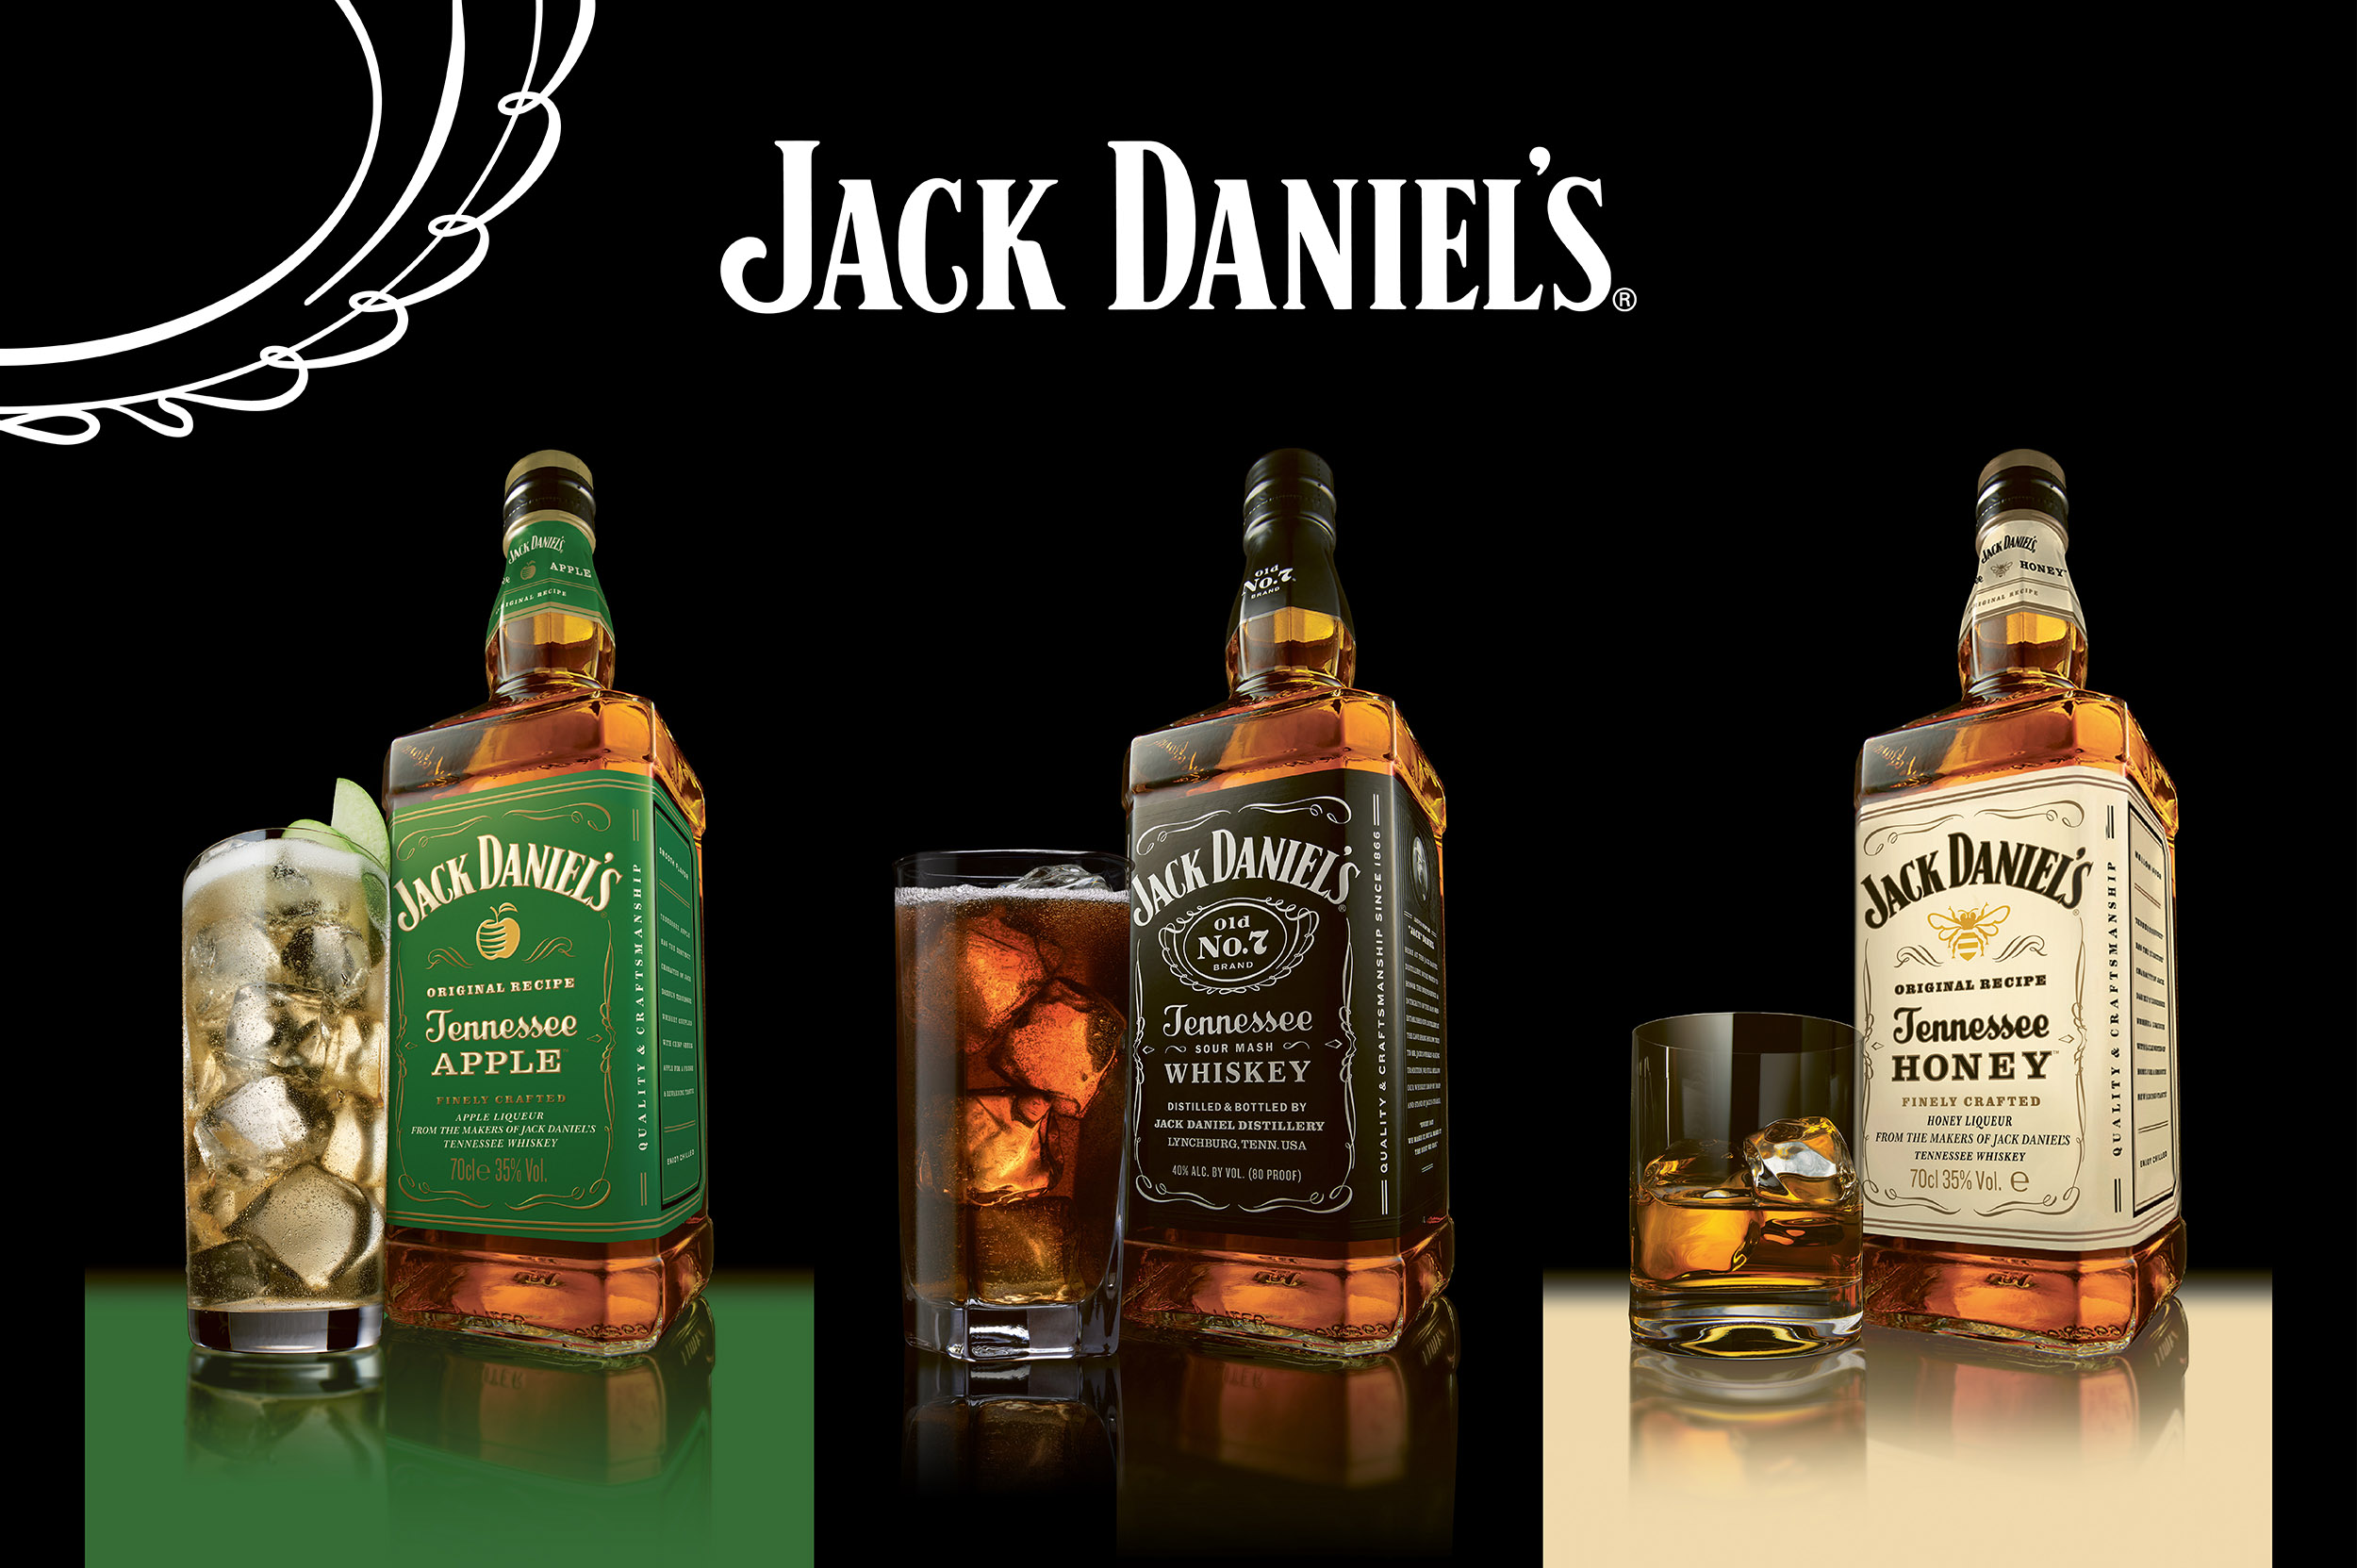 The Family of Jack Daniel's